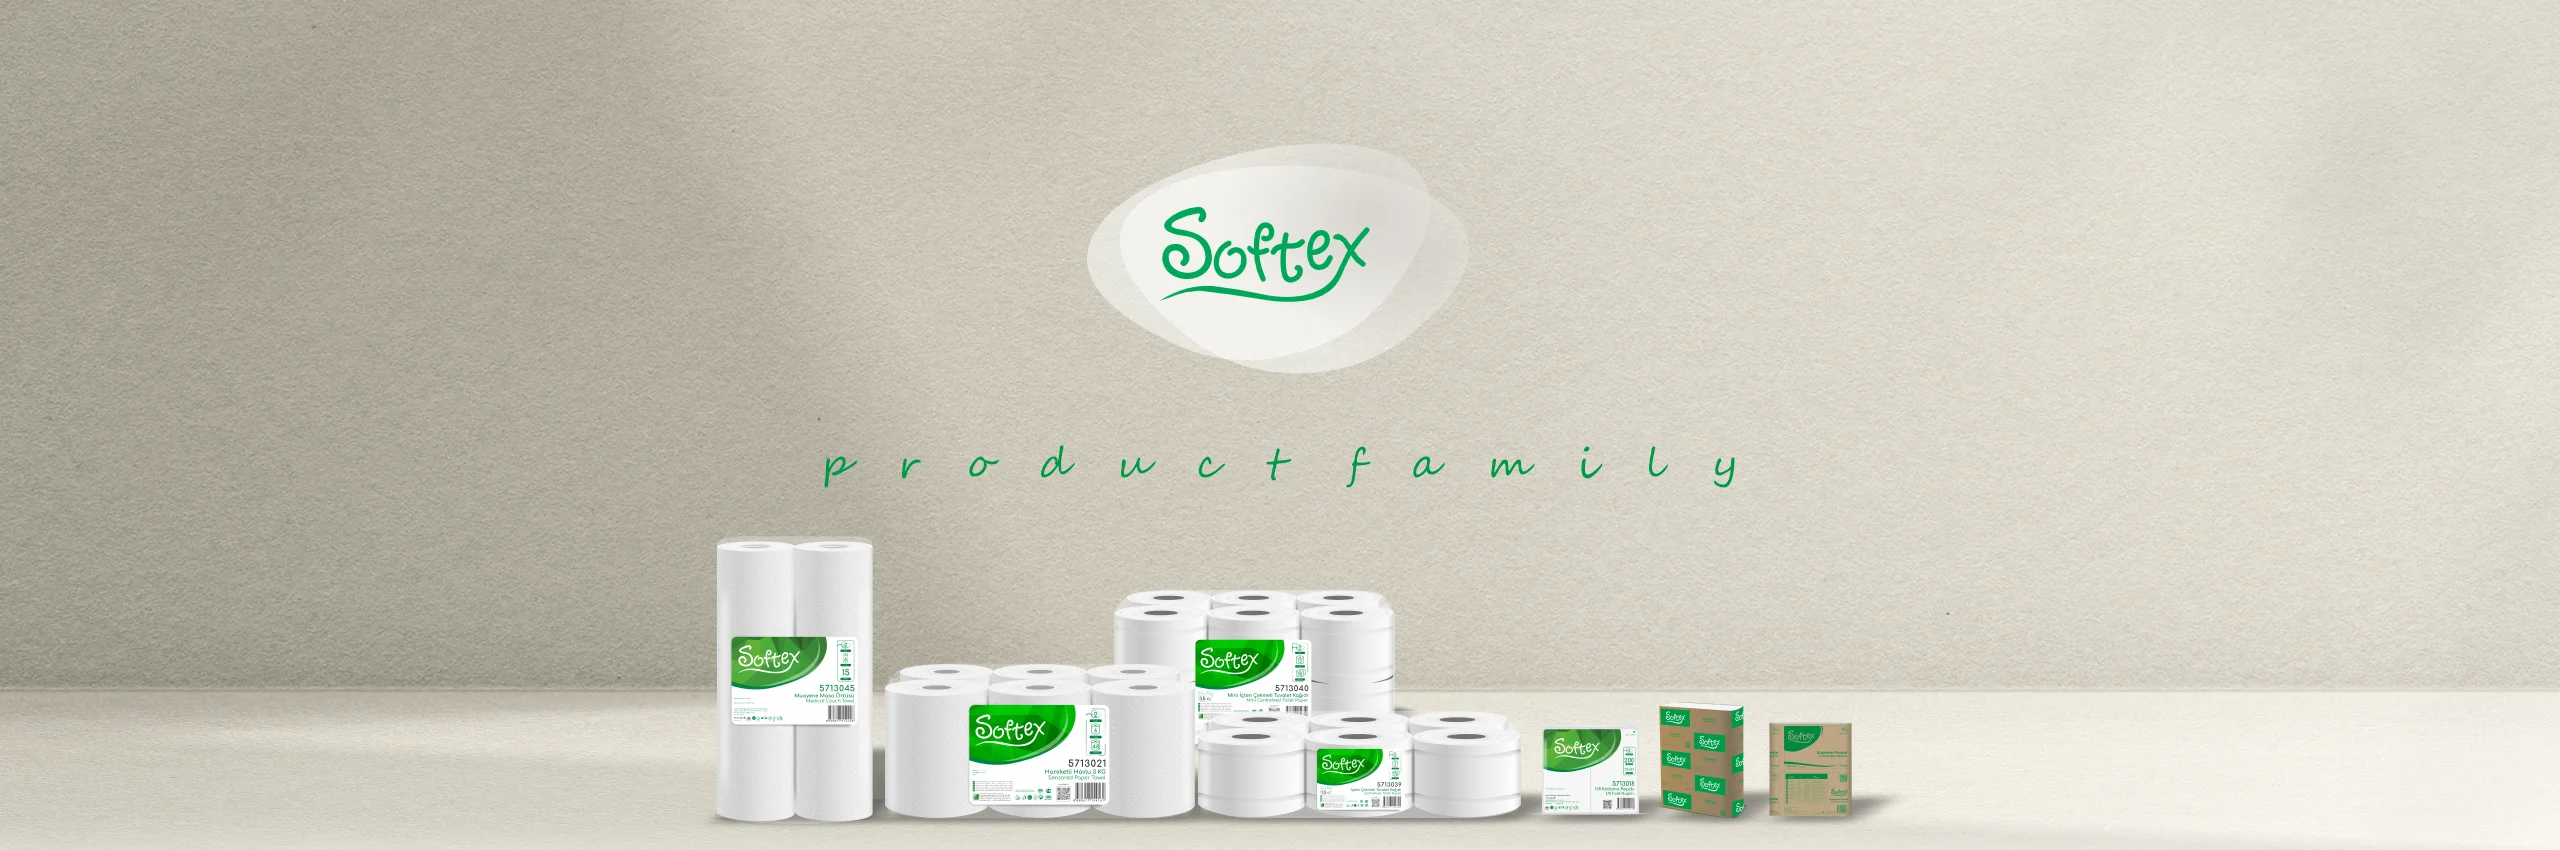 Softex tissue paper